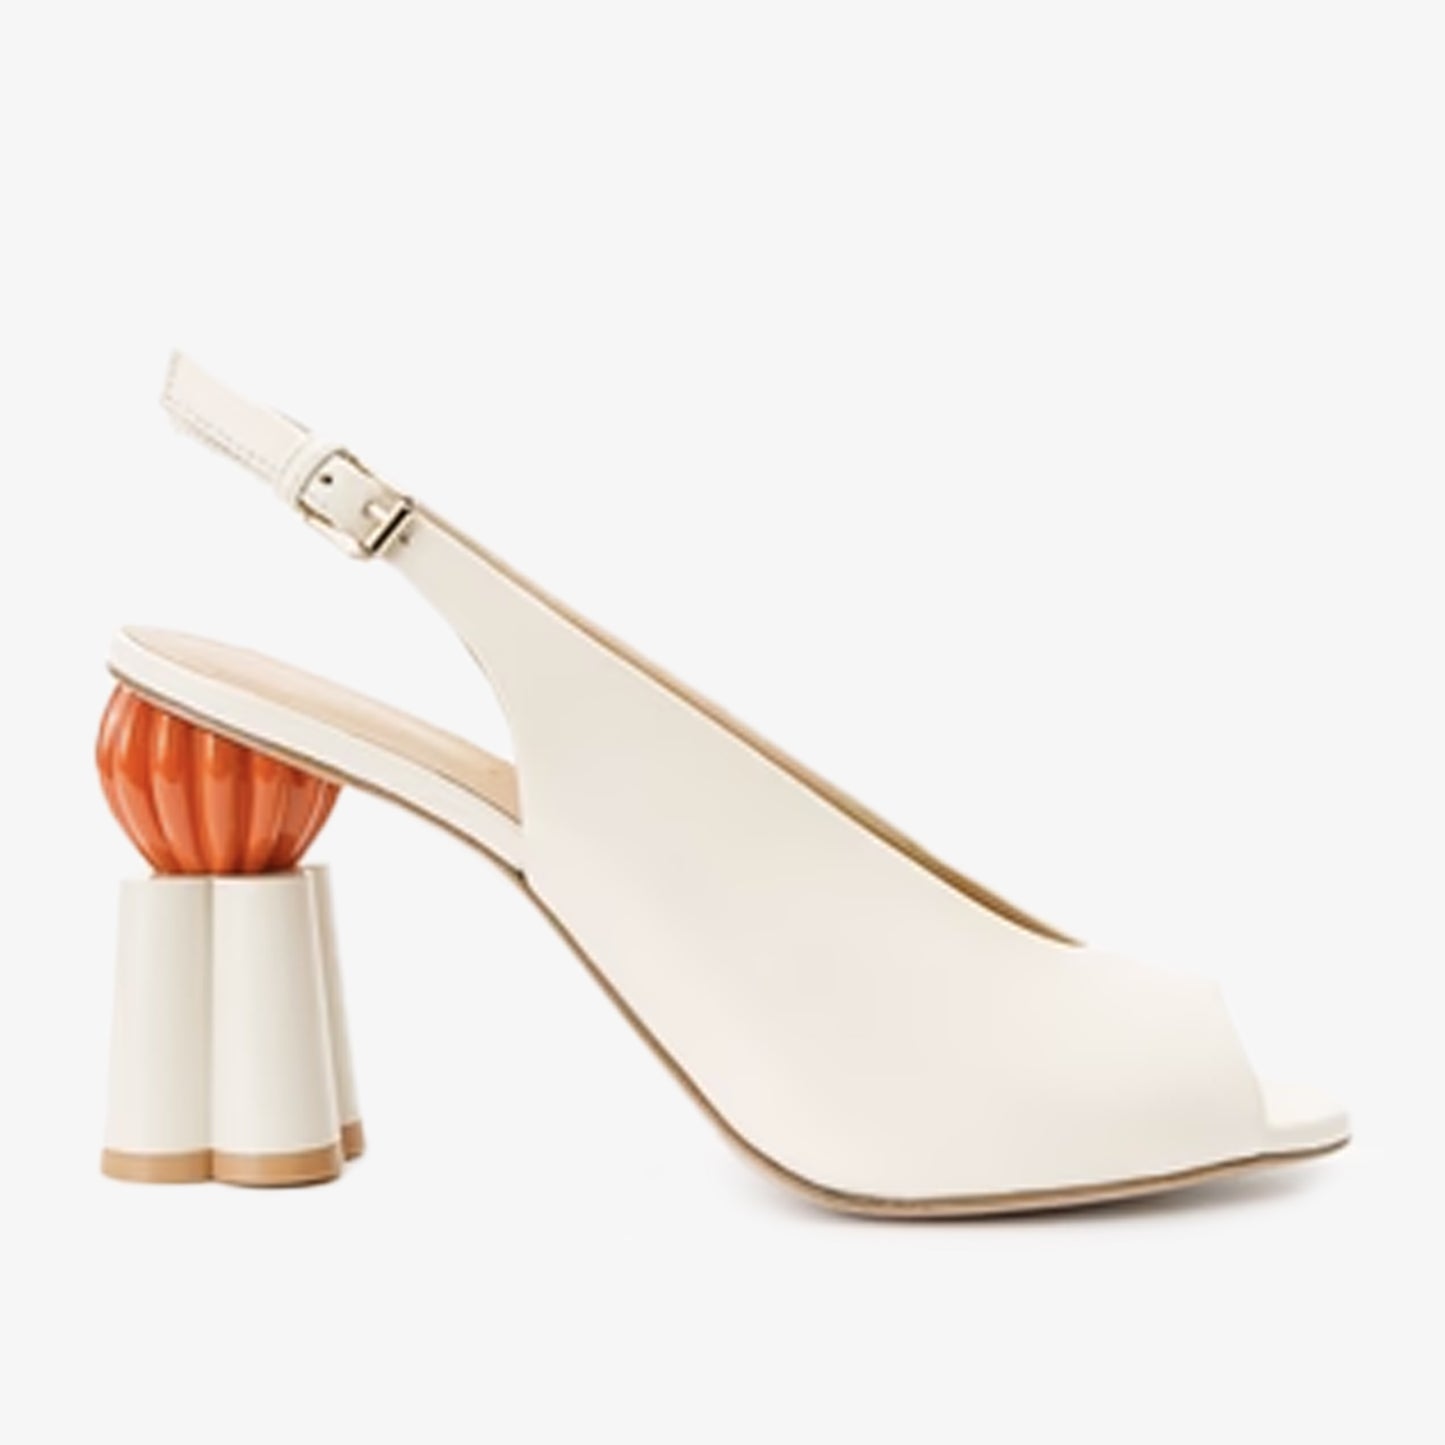 The Cimla Cream Leather Pumpkin Heel Women Sandal